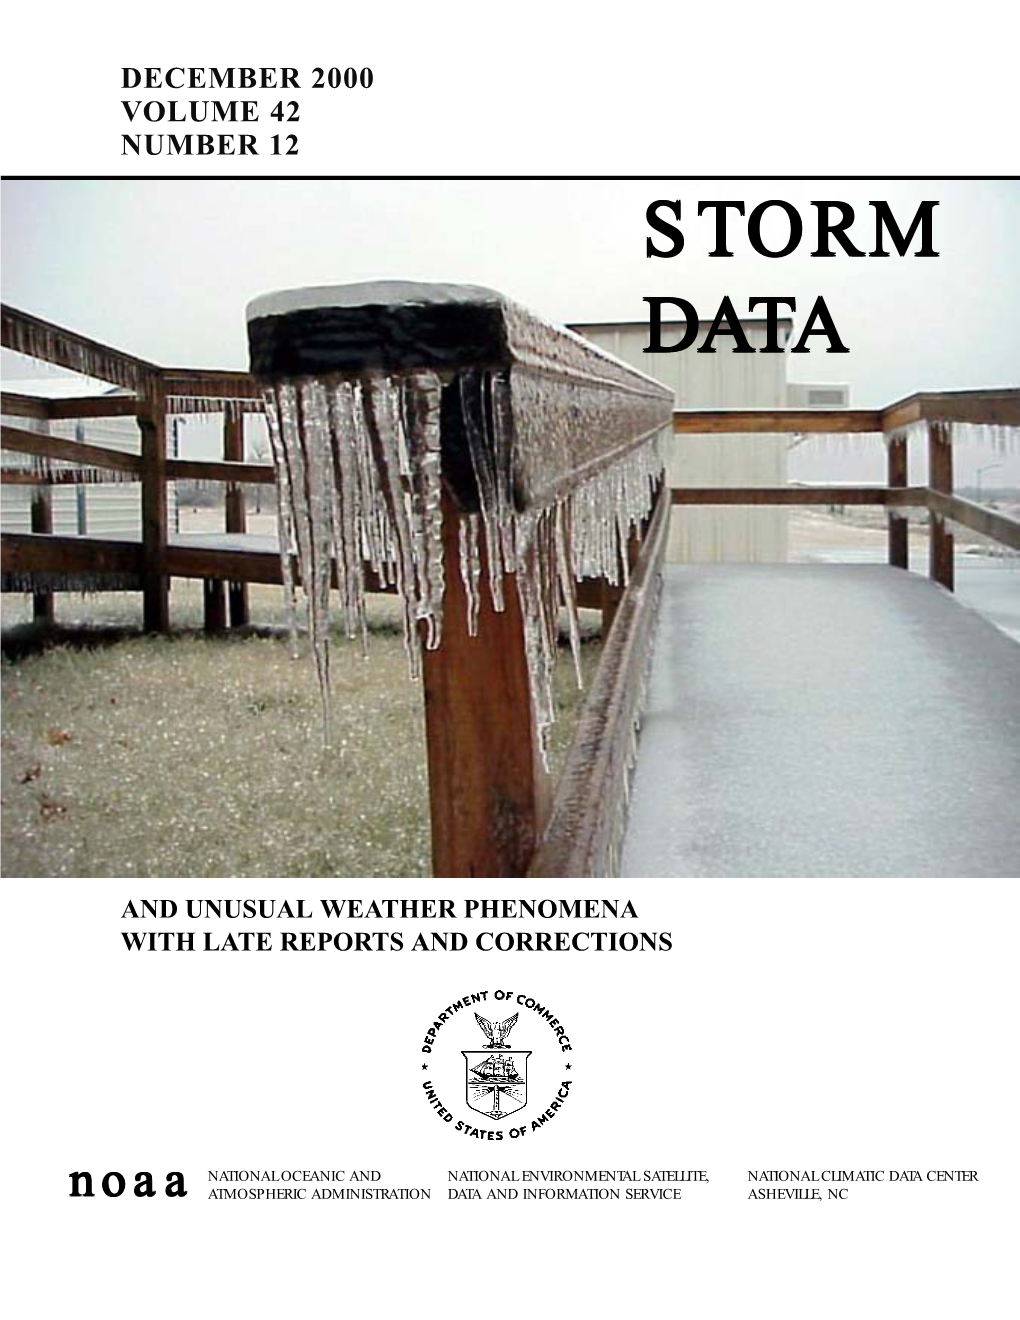 December 2000 Storm Data Publication